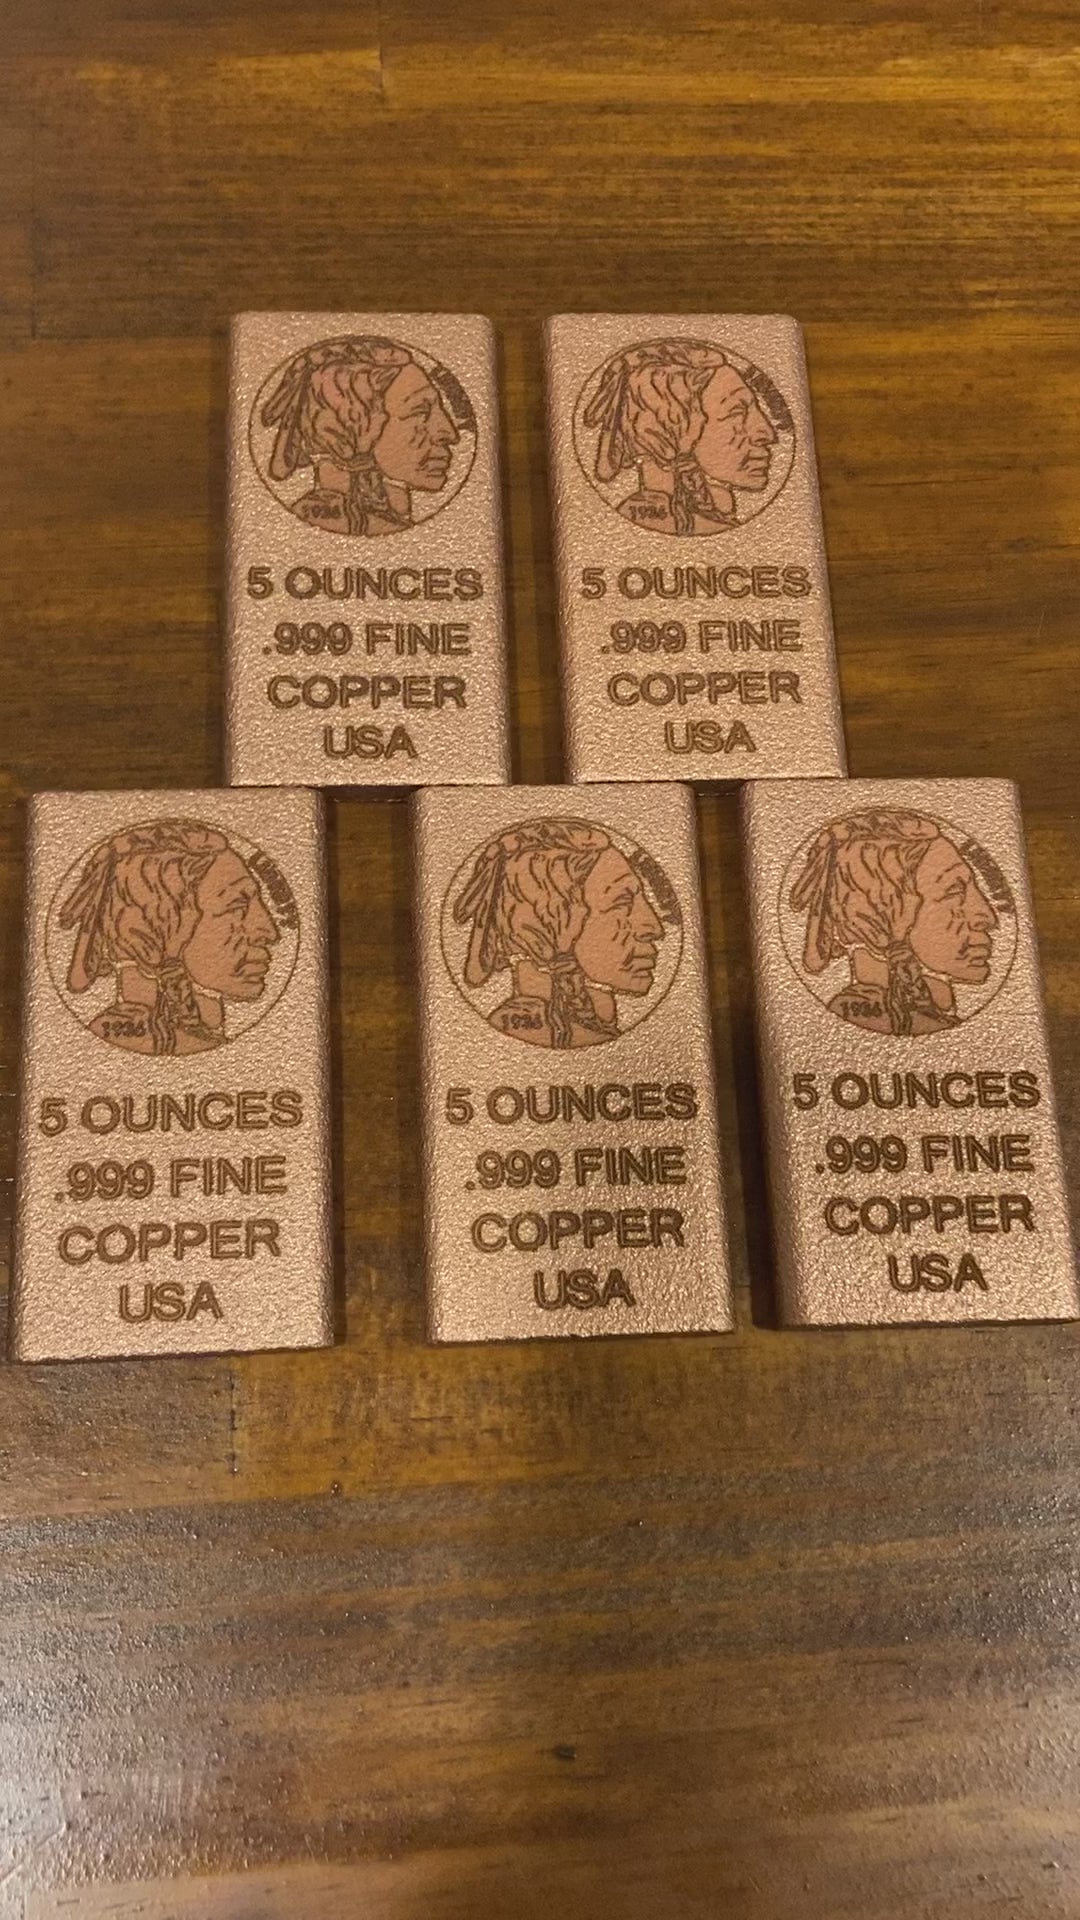 Collectable 5 oz .999 Fine Copper bullion - Indian head nickel